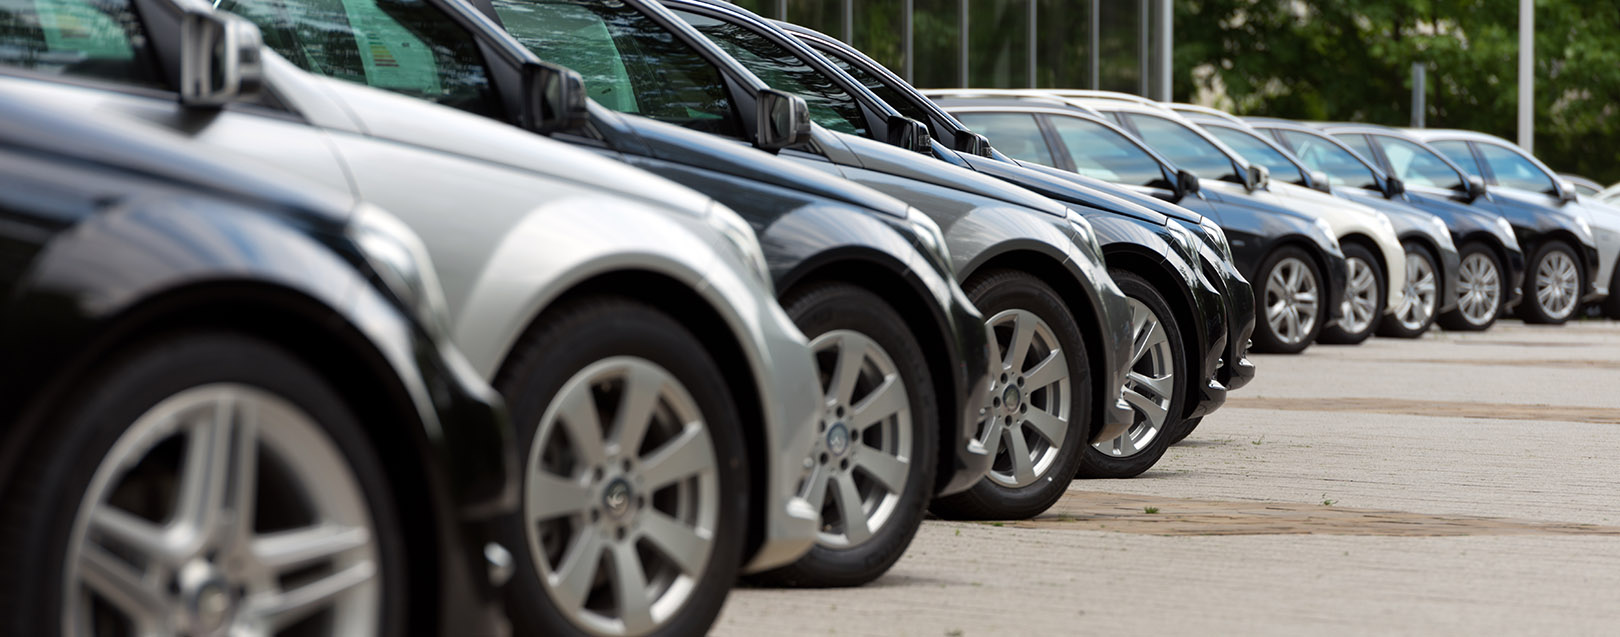 Car sales drop in May on sluggish demand